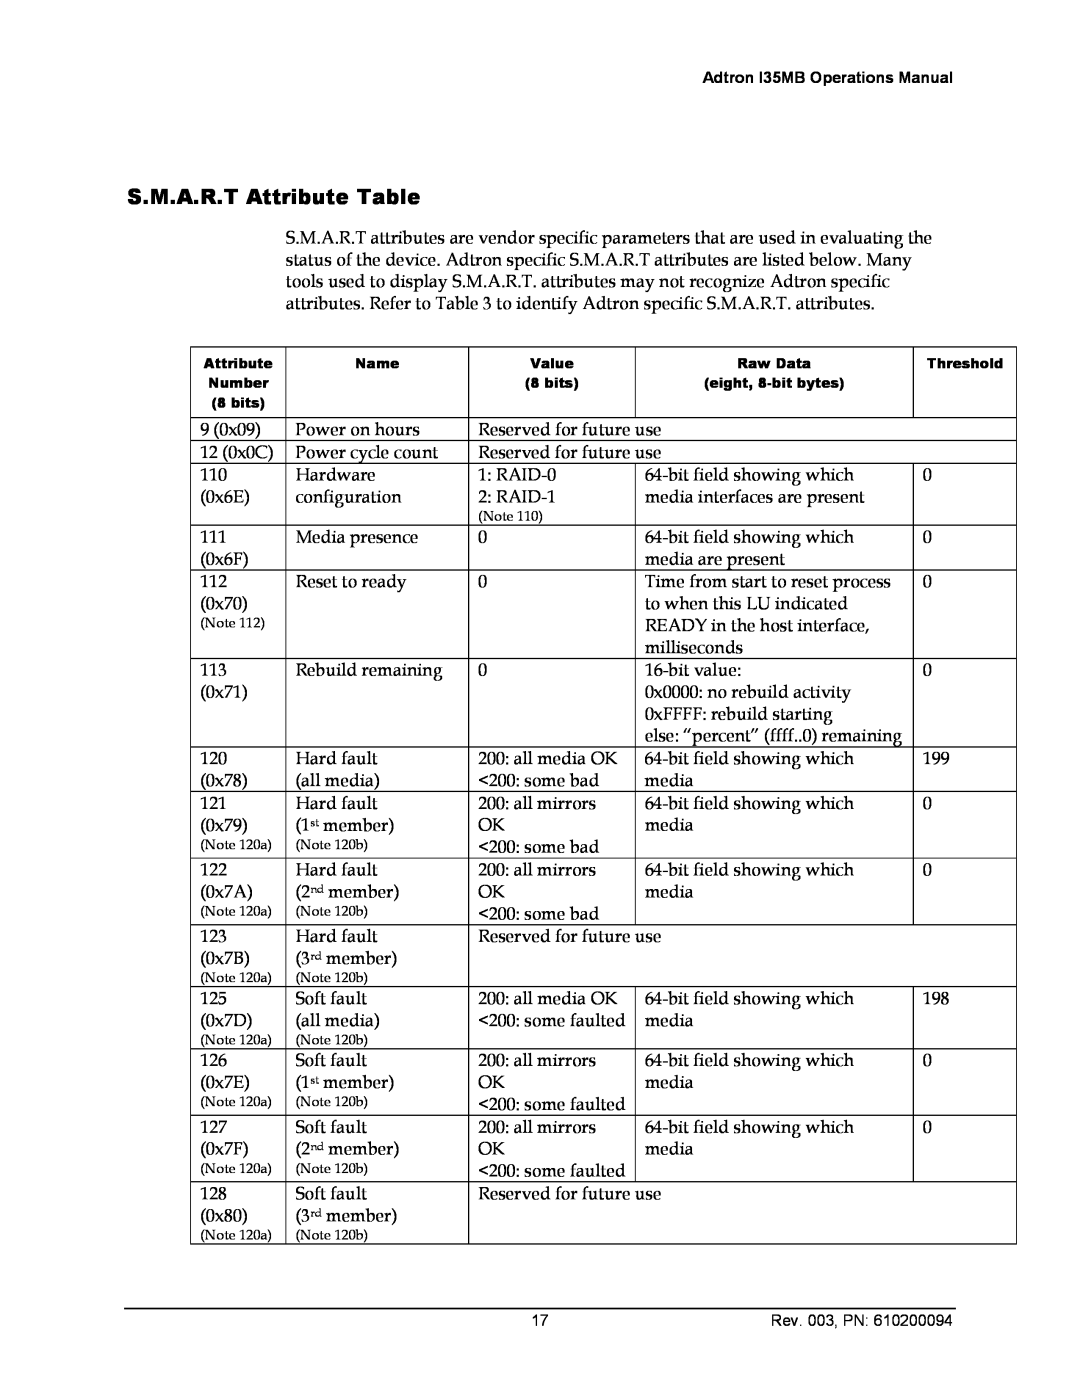 ADTRAN 610200094 manual S.M.A.R.T Attribute Table 